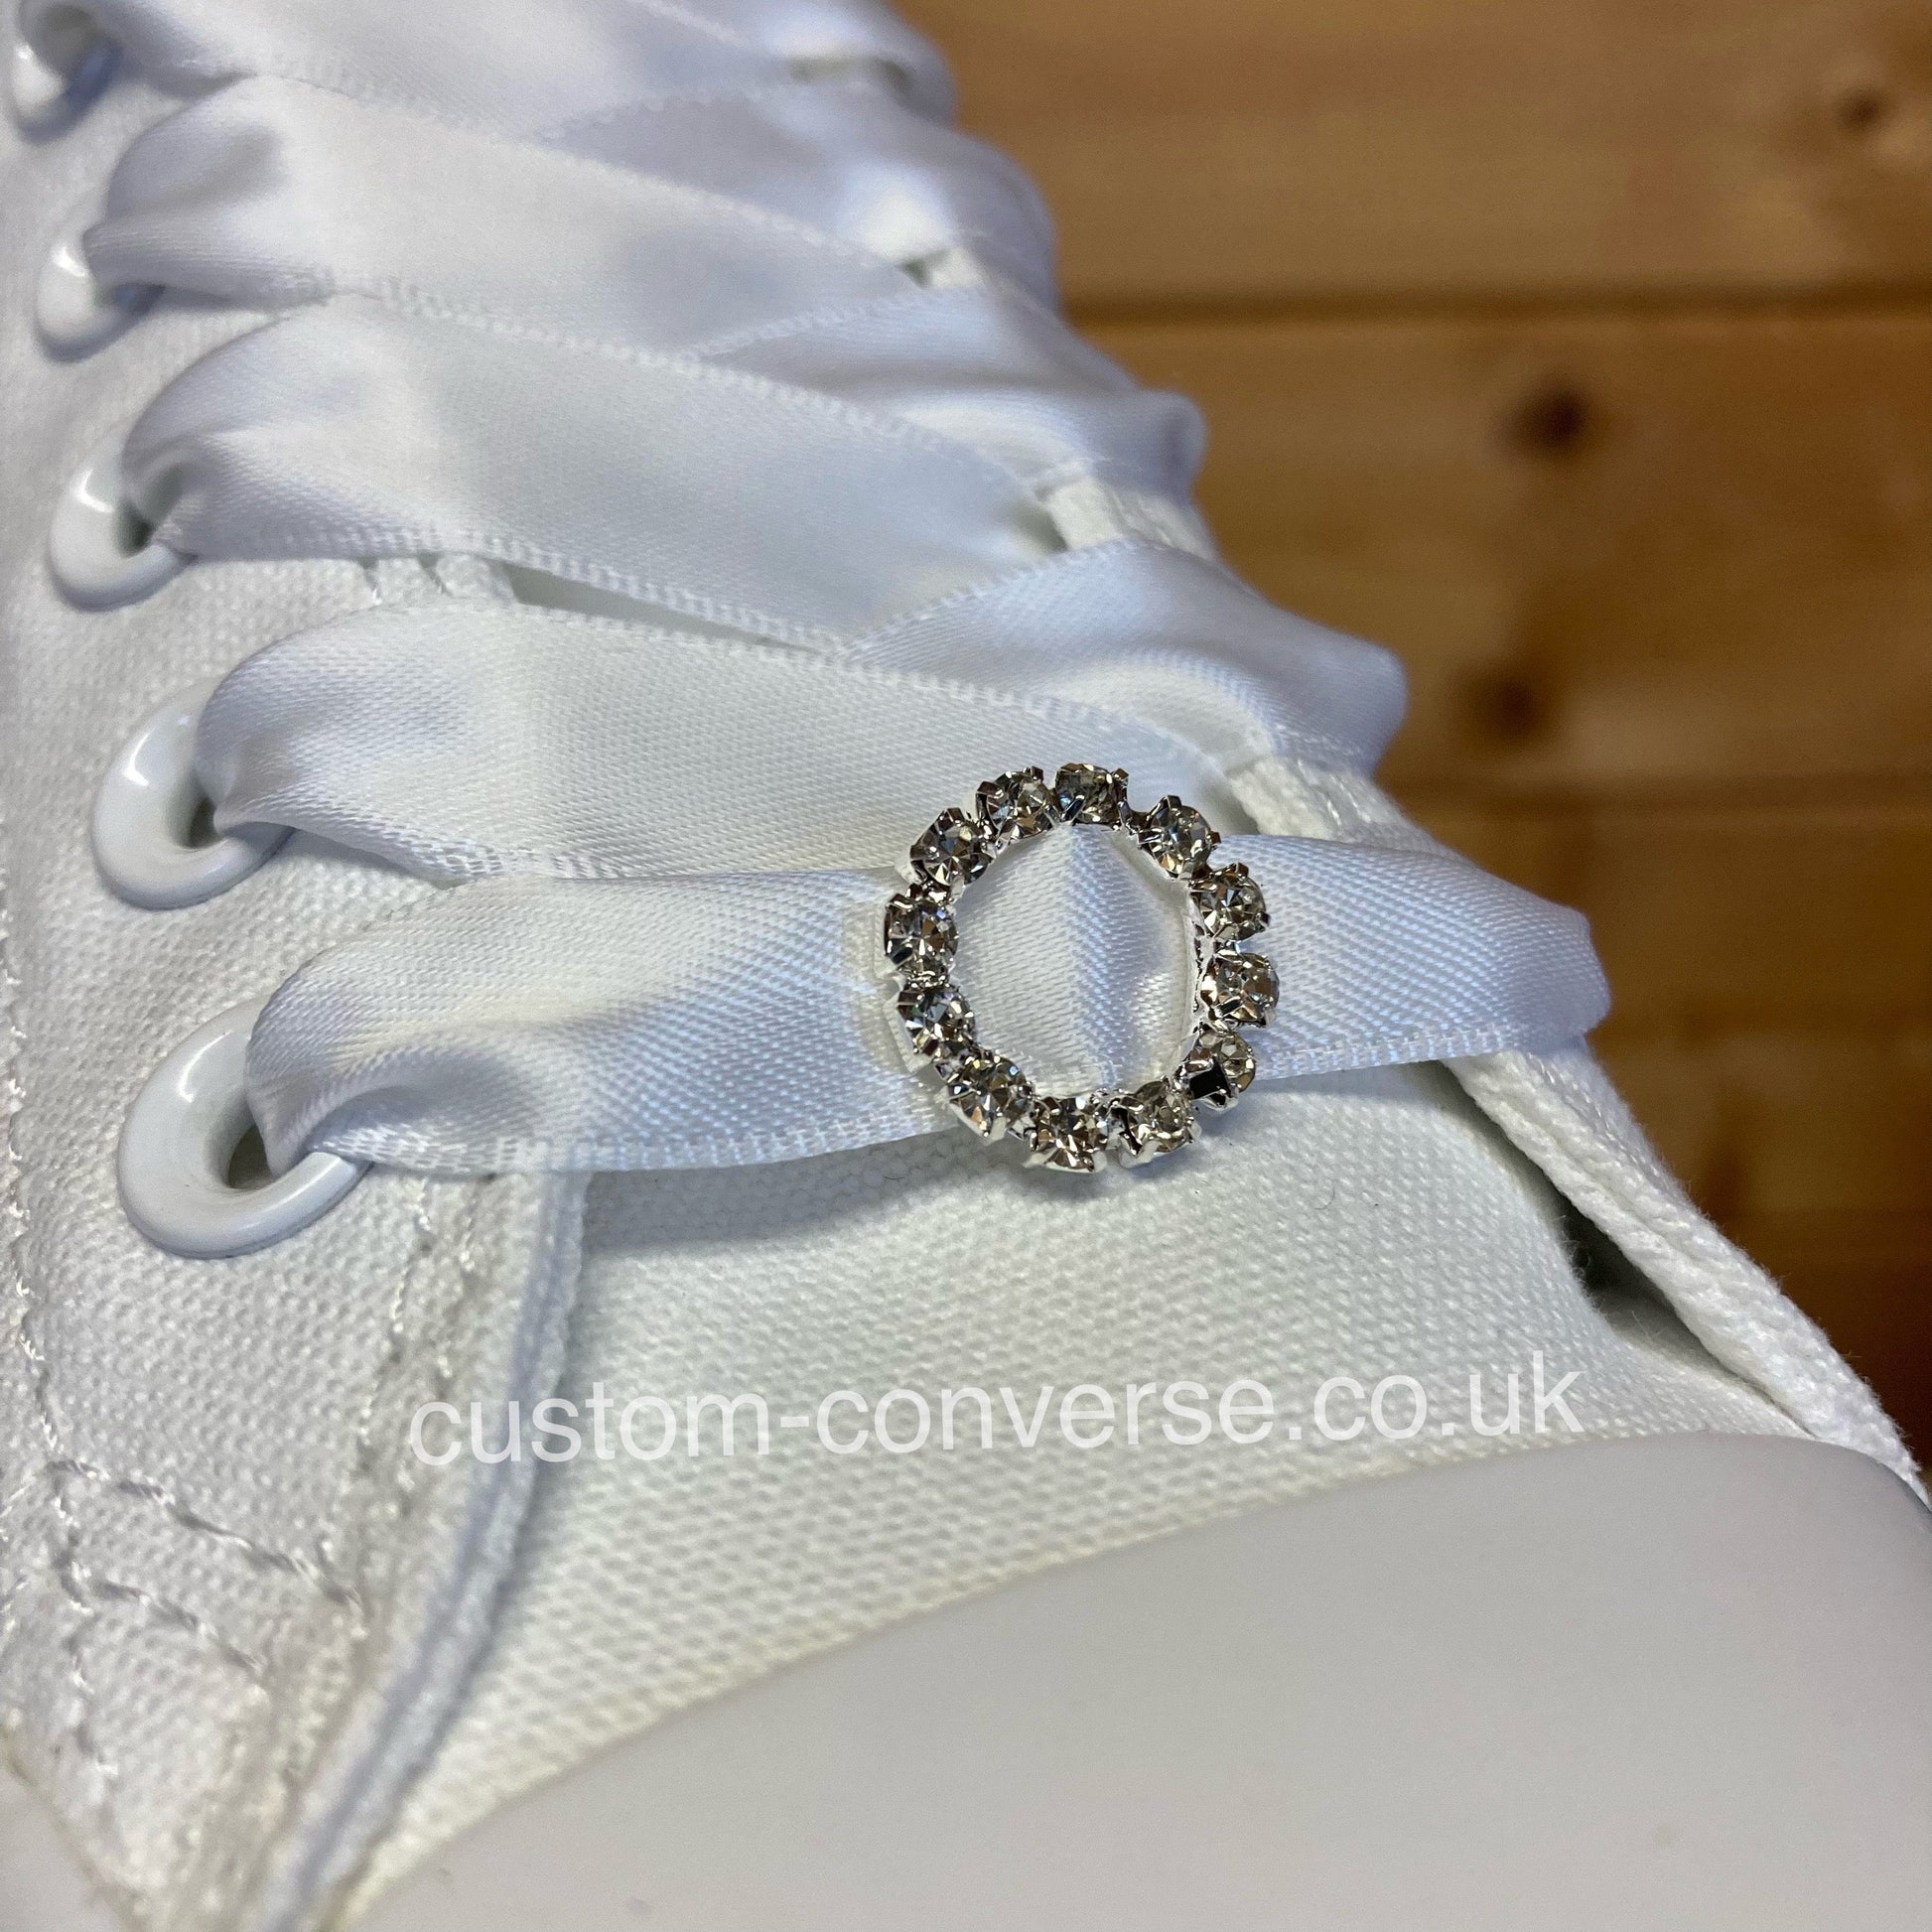 Custom Converse Ltd. Accessories Crystal Circle Shoelace Charm